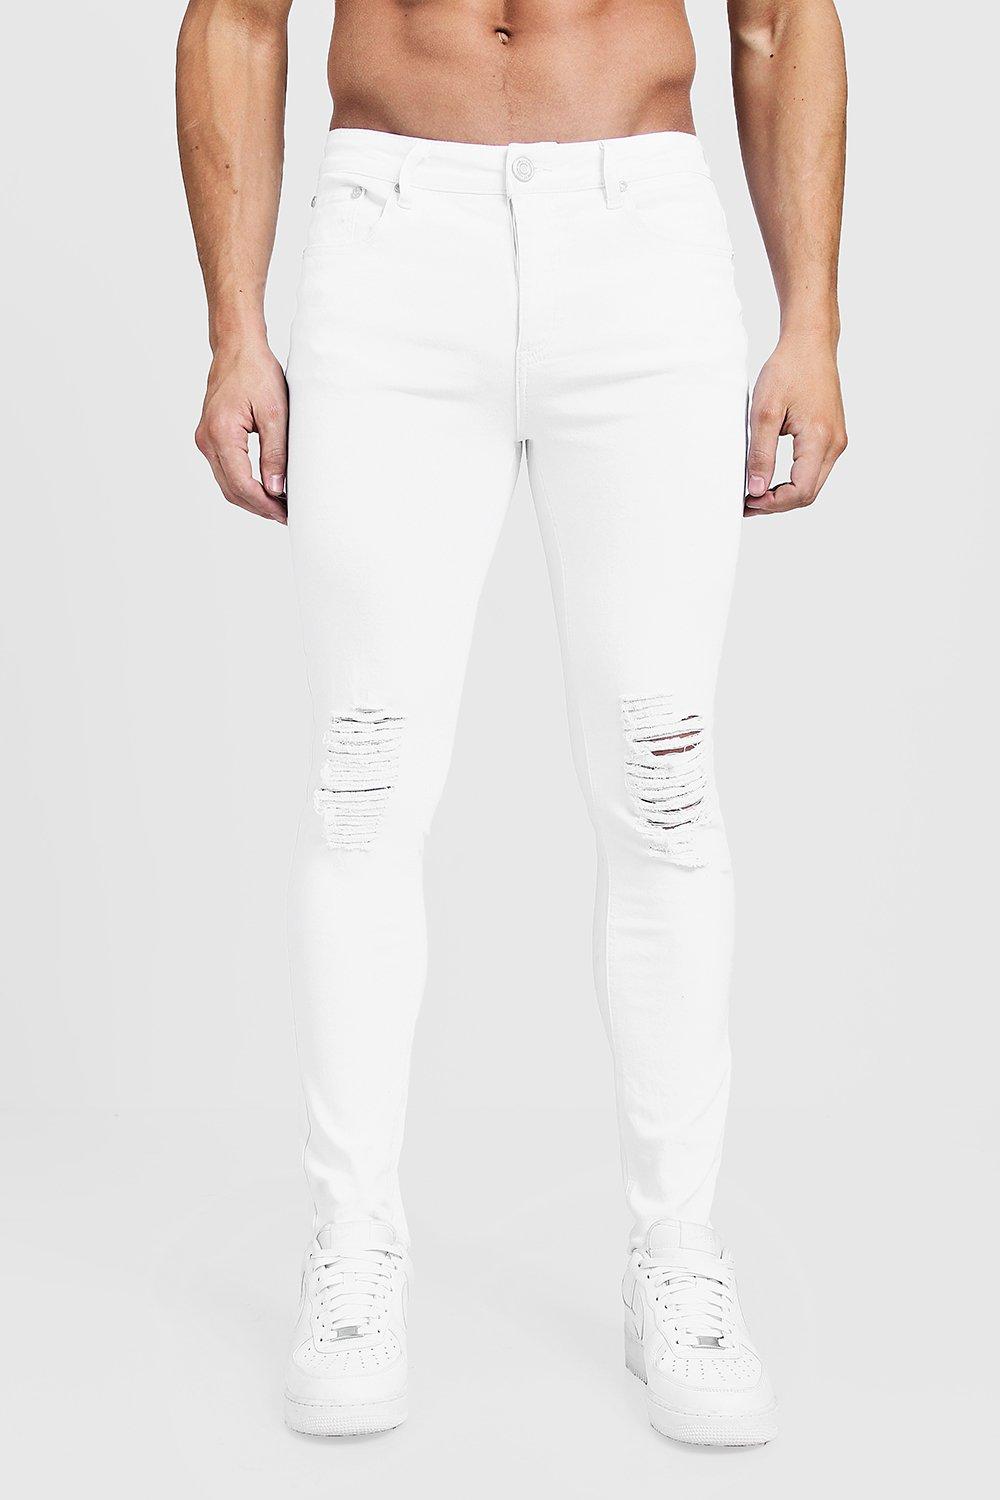 white knee cut jeans mens